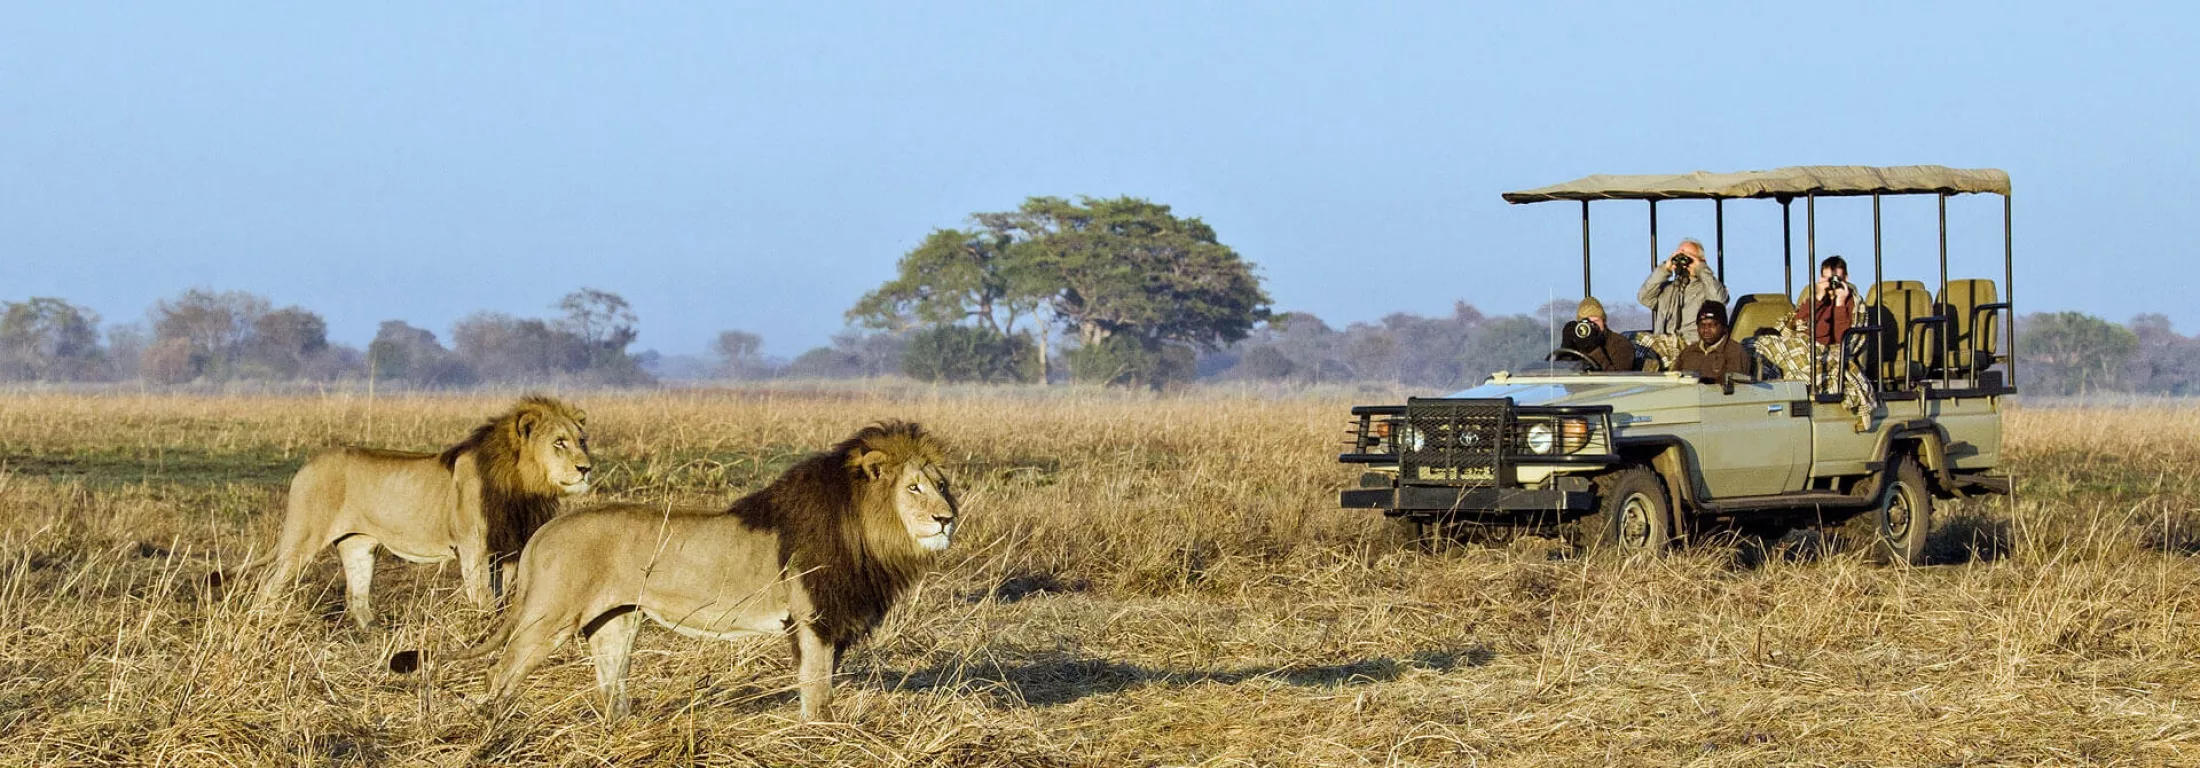 Wild Frontiers Uganda Safaris in Uganda, Africa | Safari - Rated 0.8